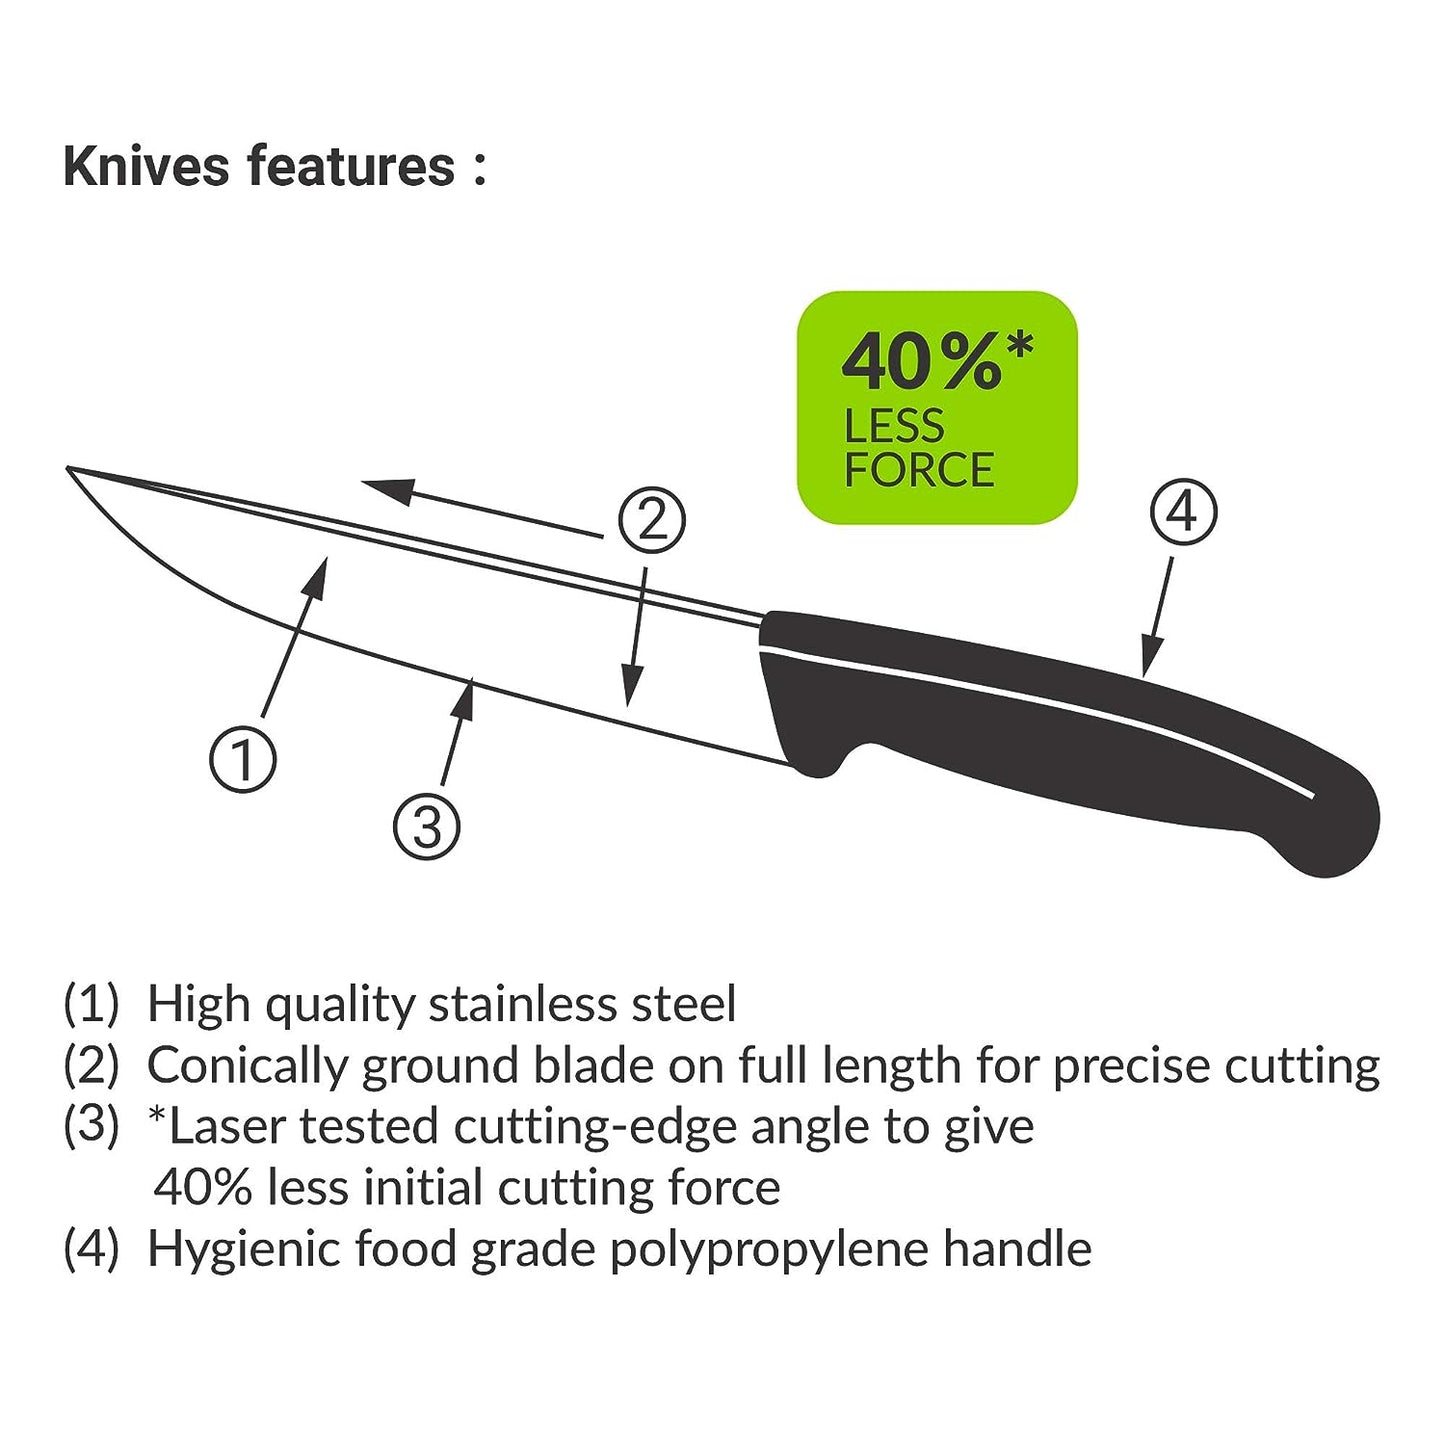 Kohe Standard Knife 1135.1 (188 mm)